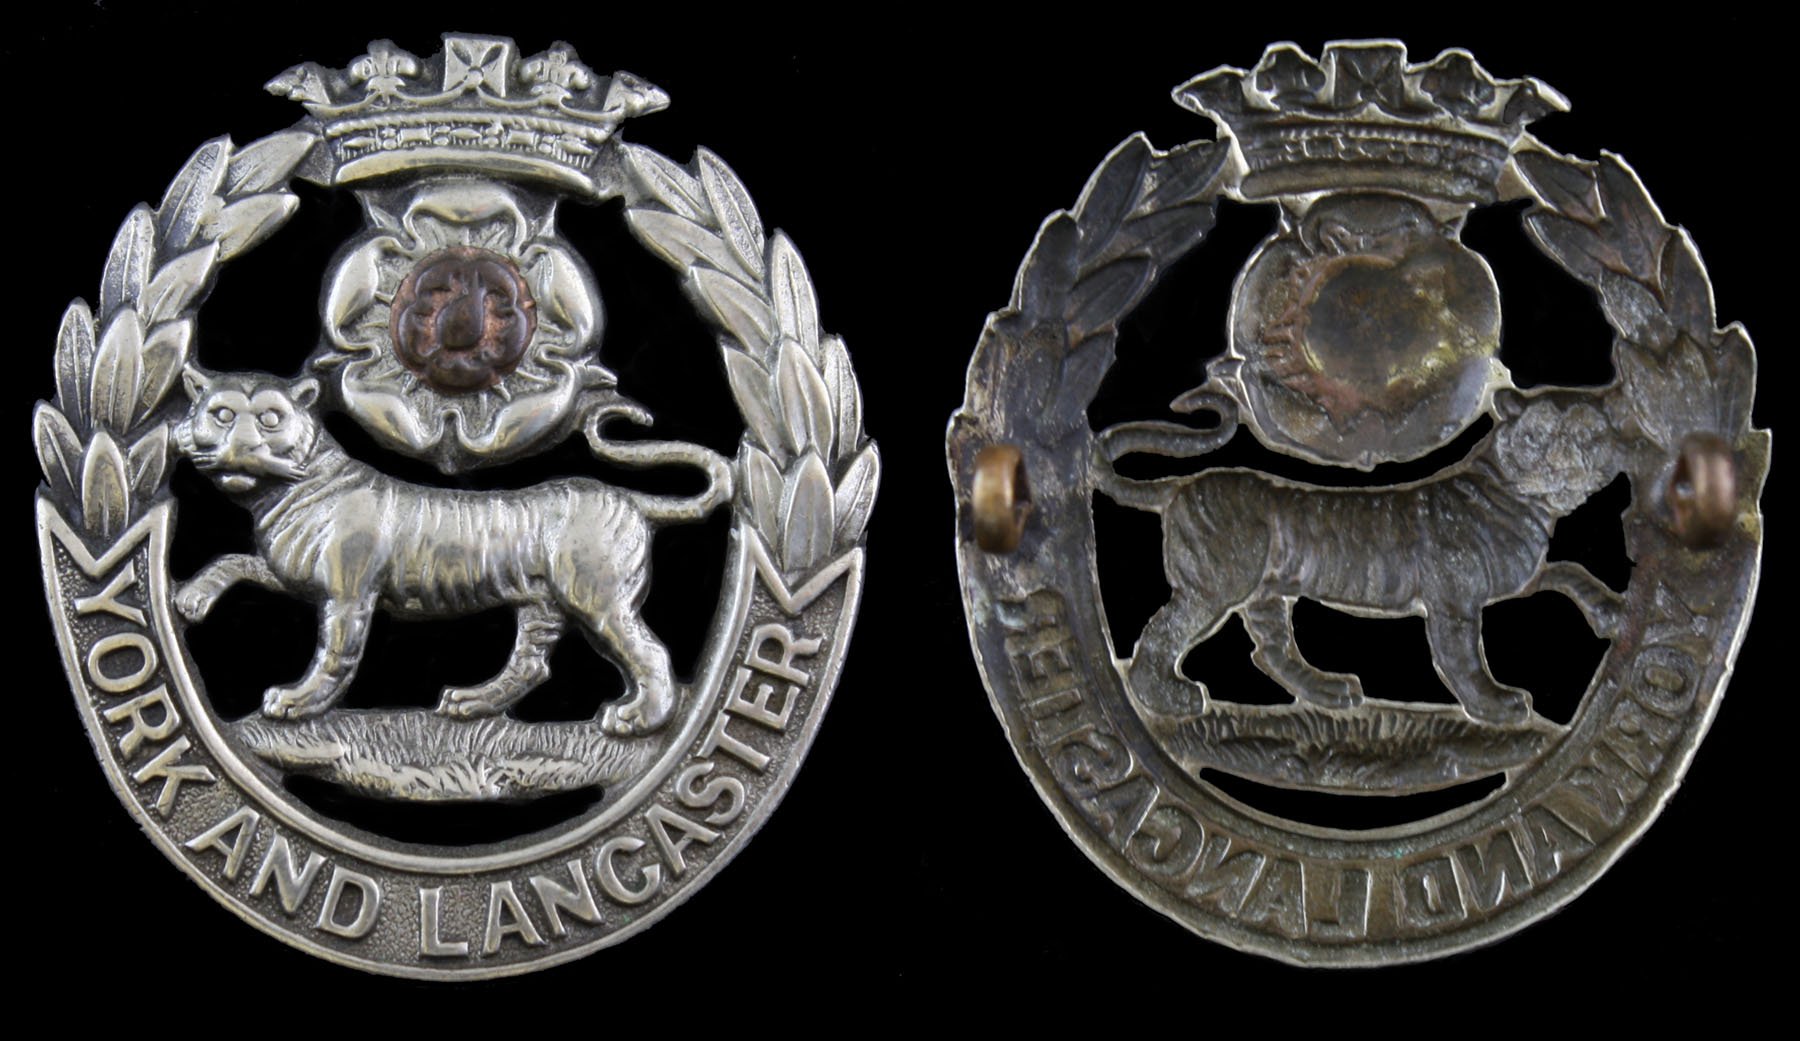 2nd Volunteer Battalion Badge 1897 to 1908-1st pattern